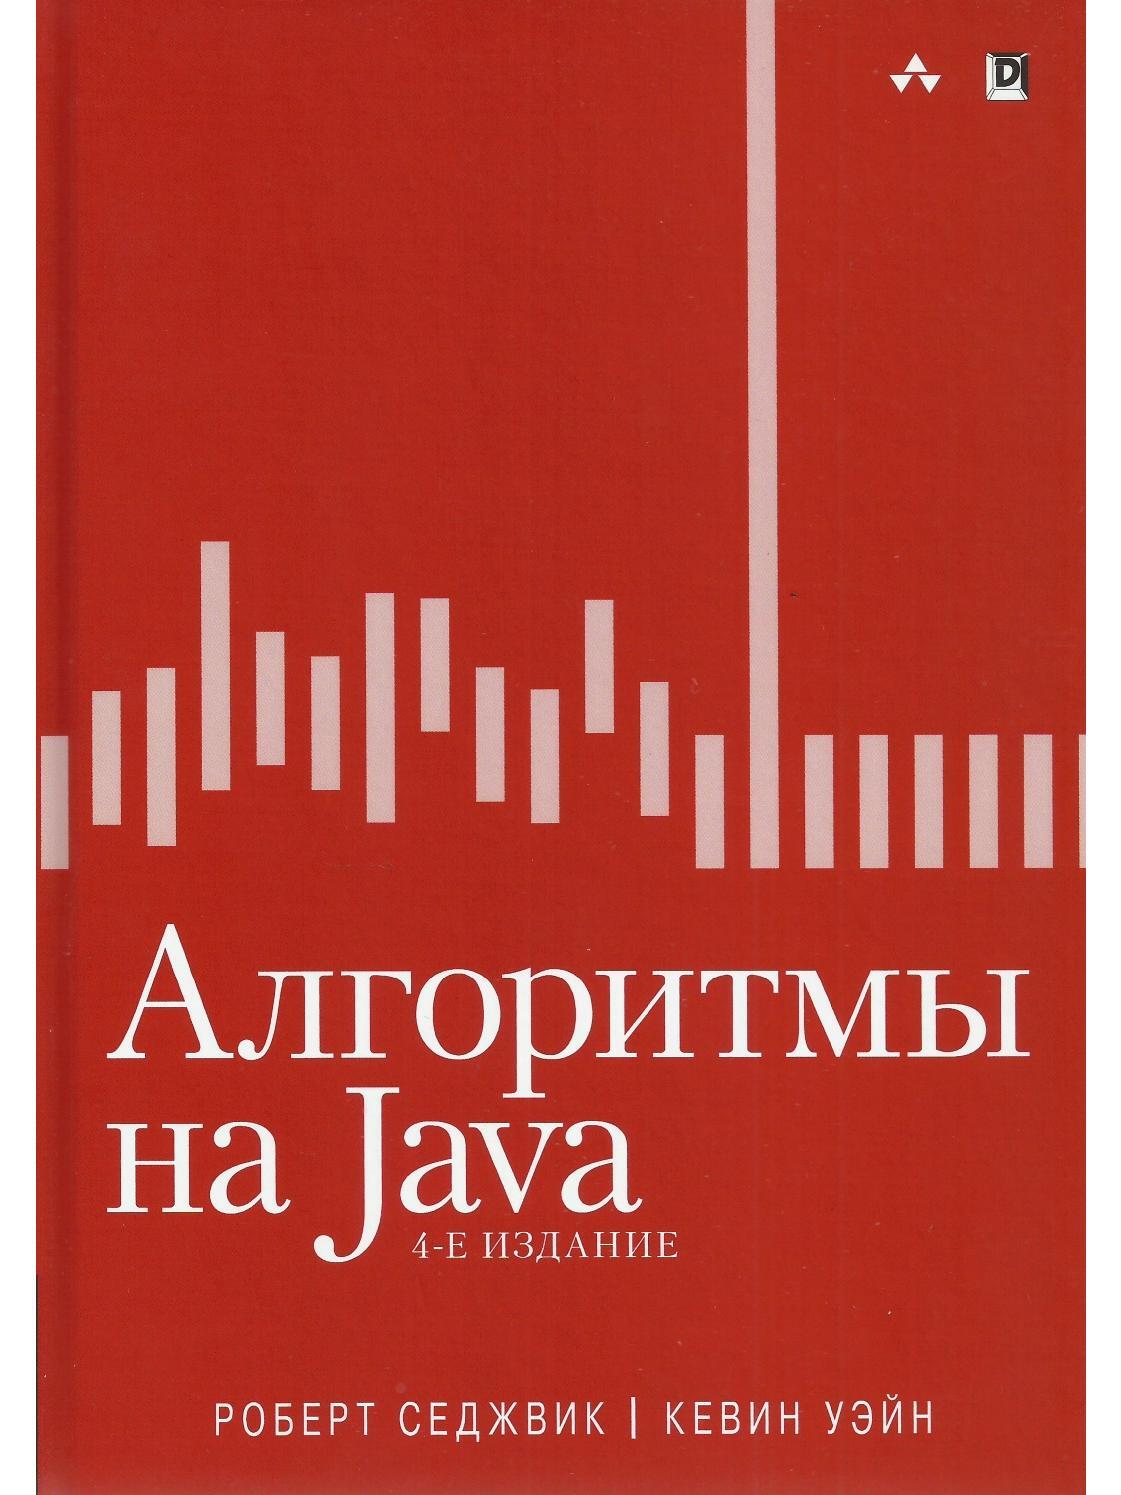 Java book